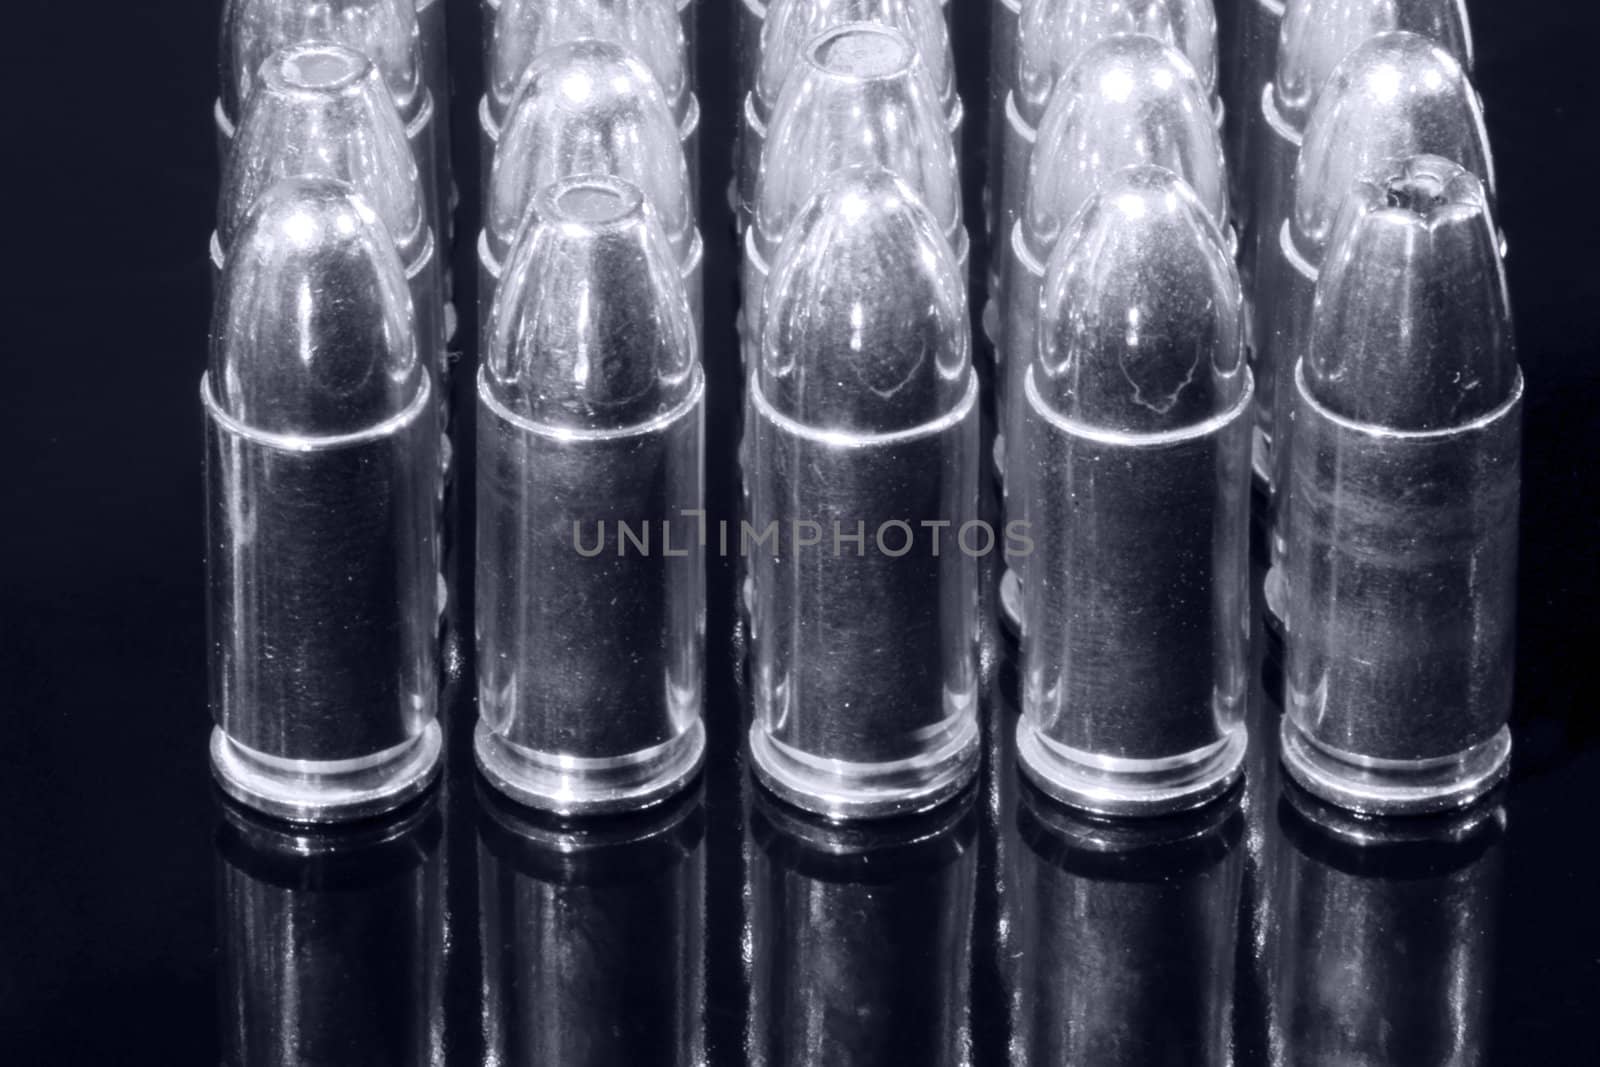 Various 9mm bullets